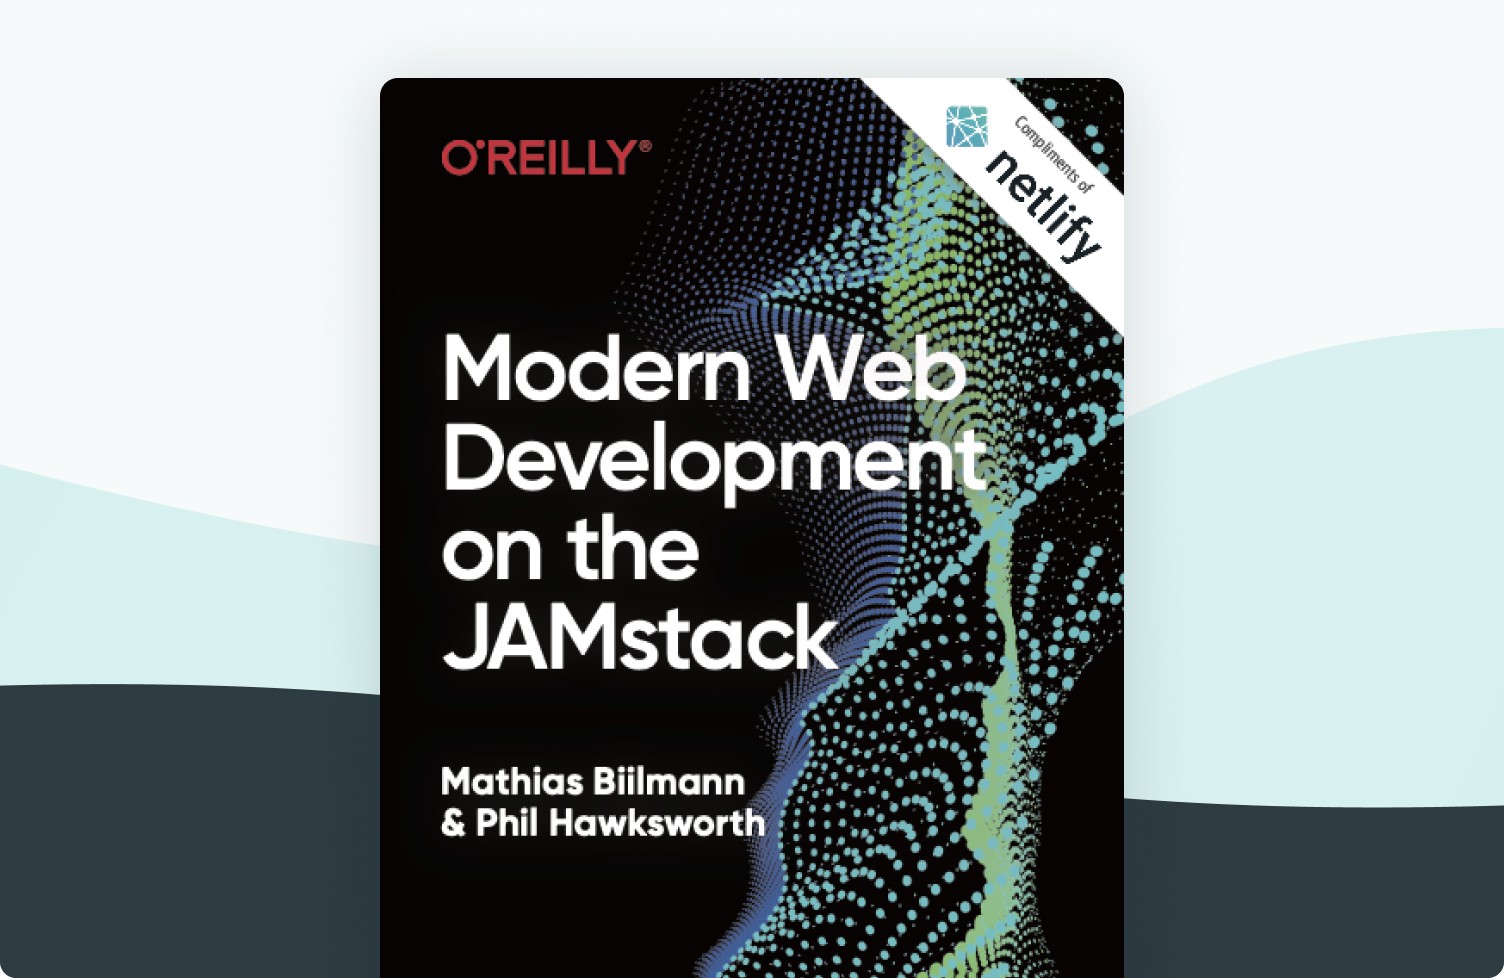 "Modern Web Development on the JAMstack" book